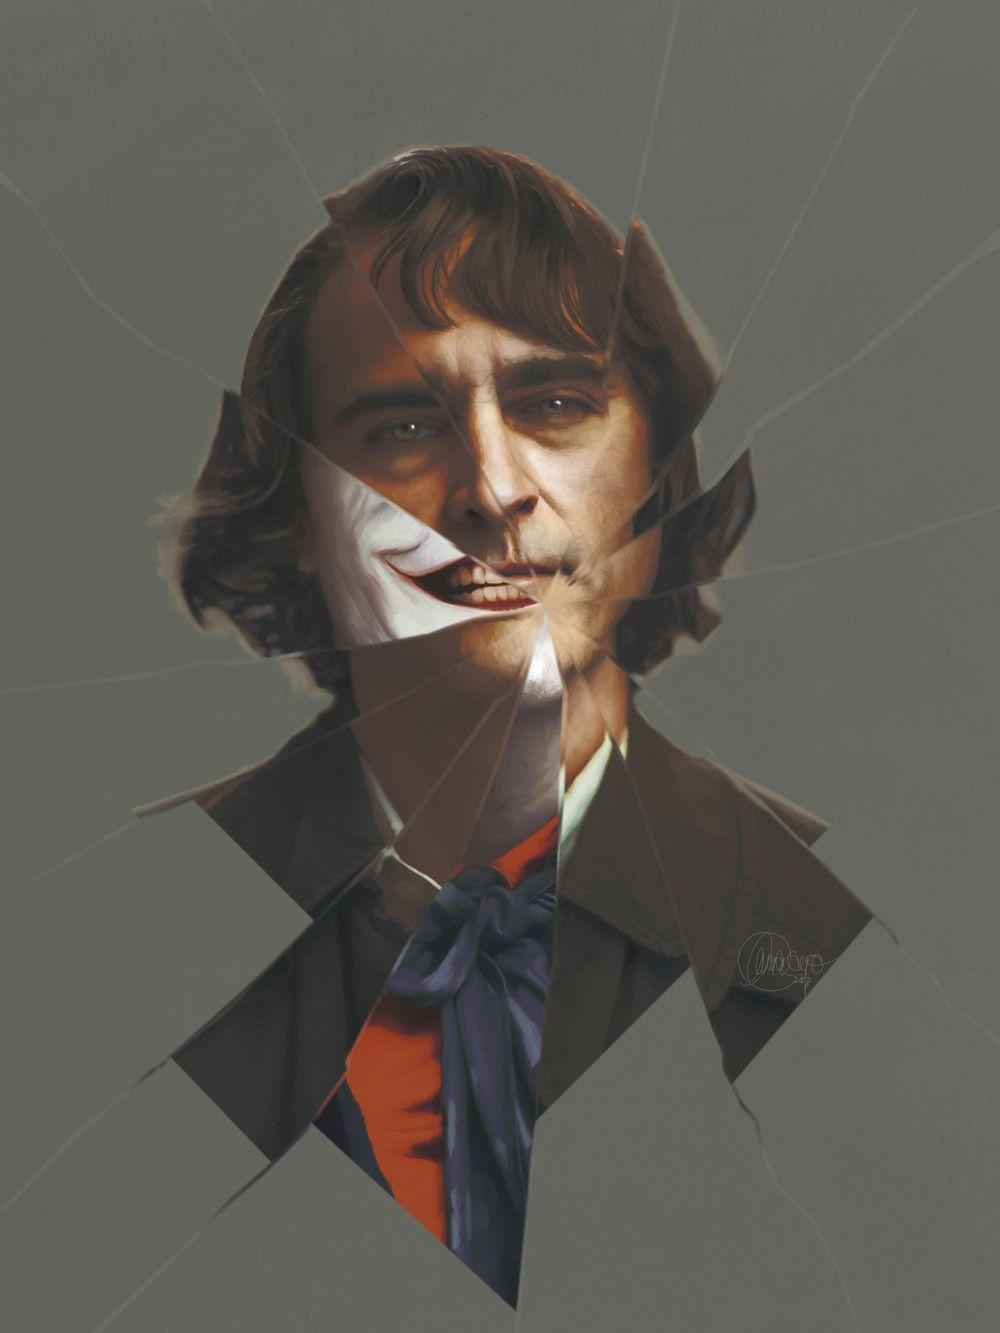 Movie Wallpaper: Joker Movie Wallpaper Joaquin Phoenix